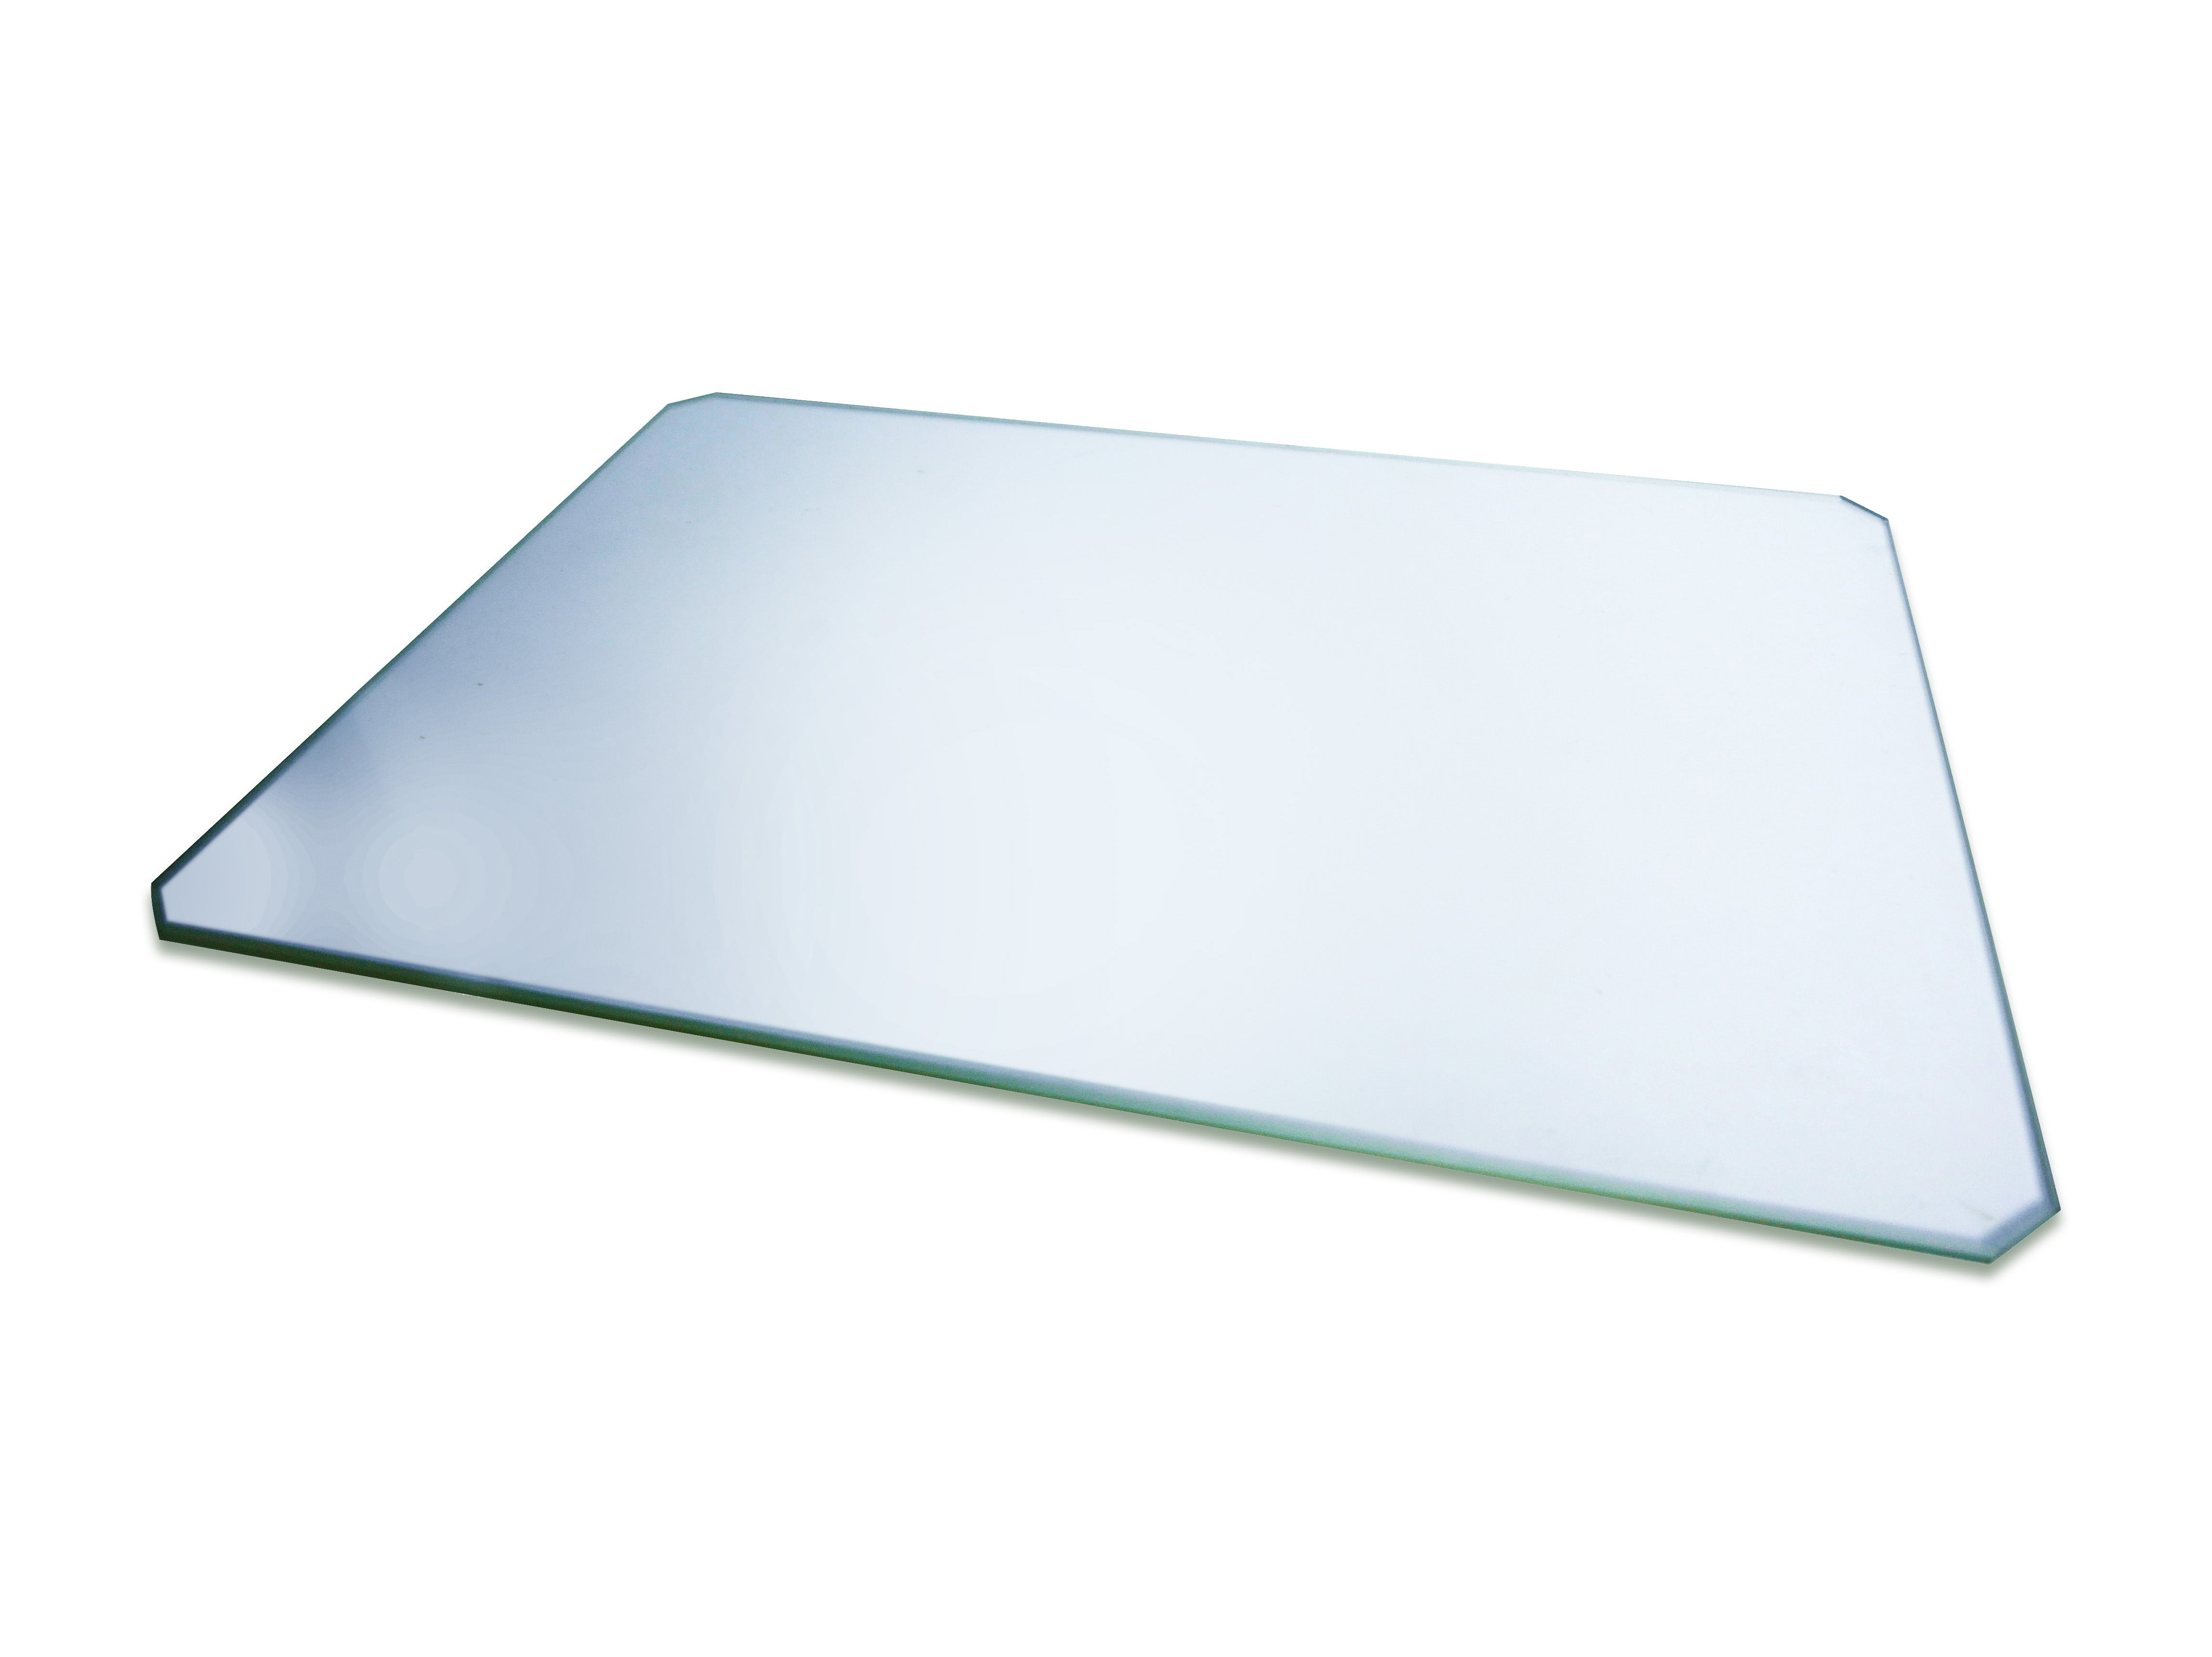 310 mm x 310 mm Borosil Glas Teller/Bett W/flach poliert Rand für 3D Drucker 